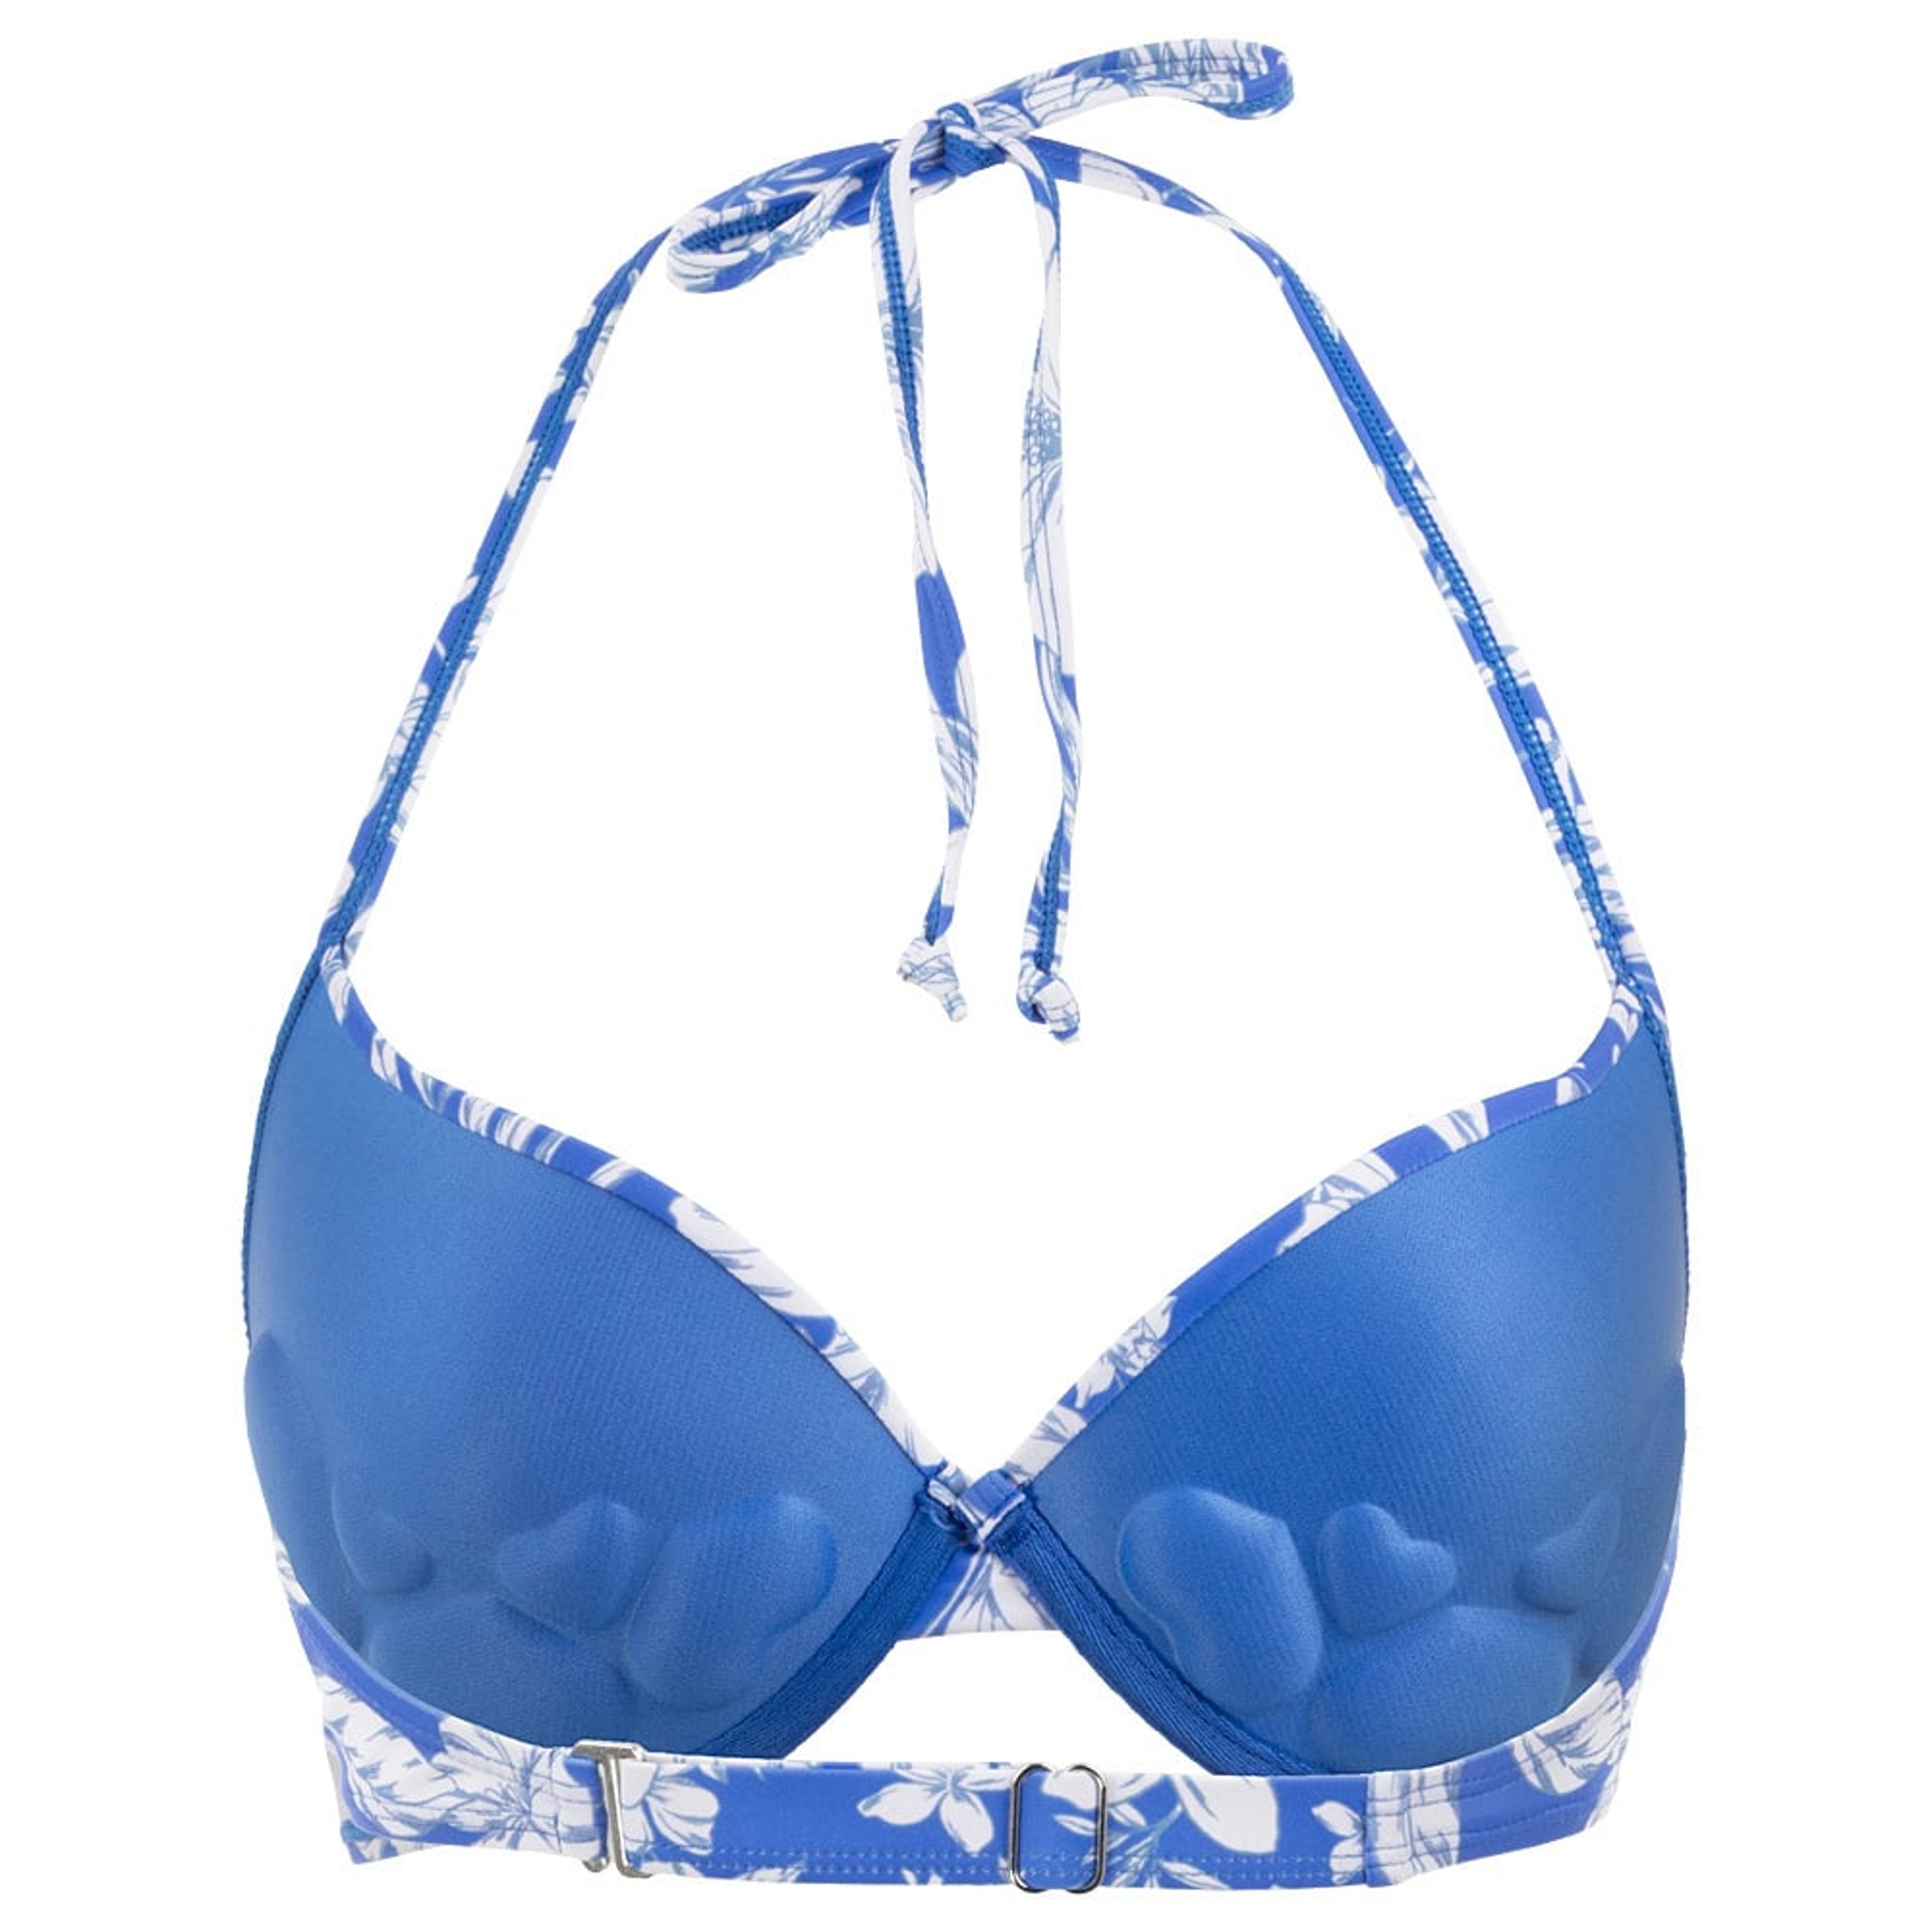 New Girl Order handkerchief bikini top in blue and yellow swirl print